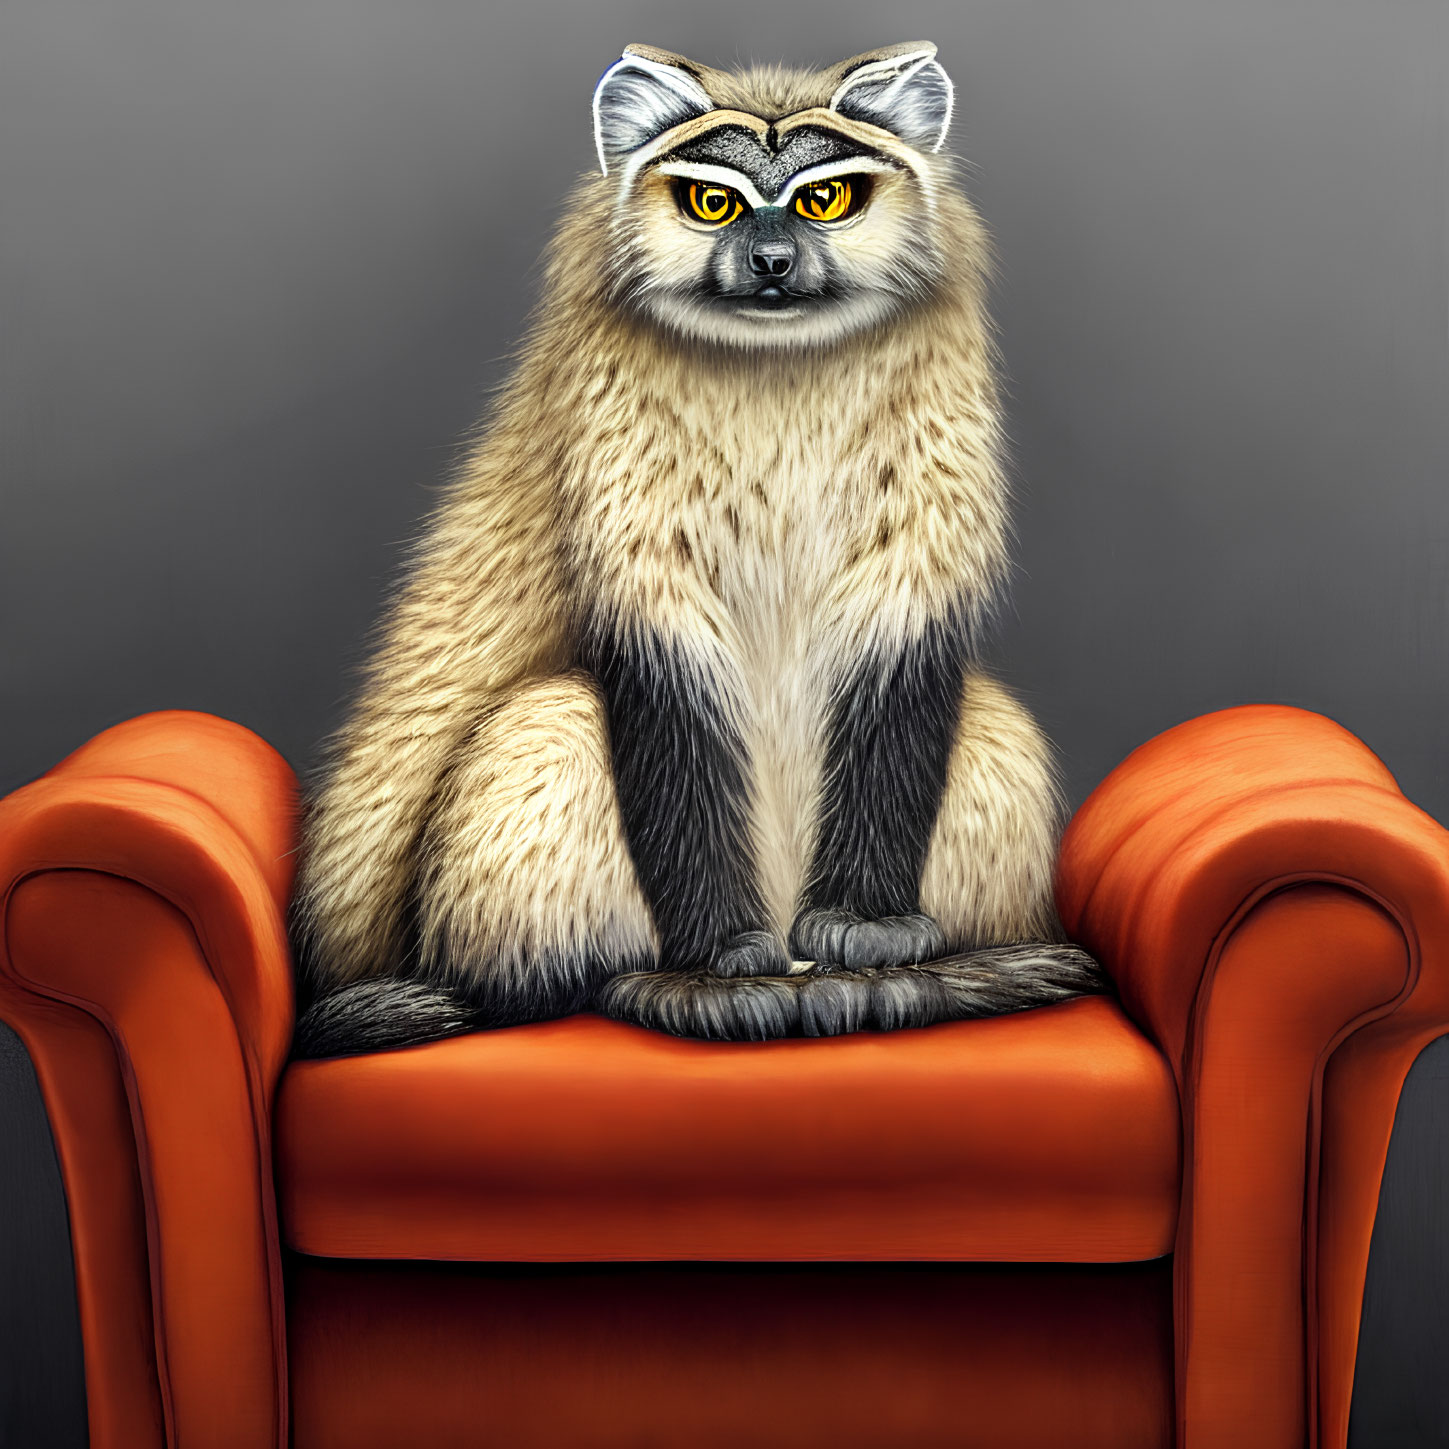 Regal lemur on red-orange armchair with yellow eyes